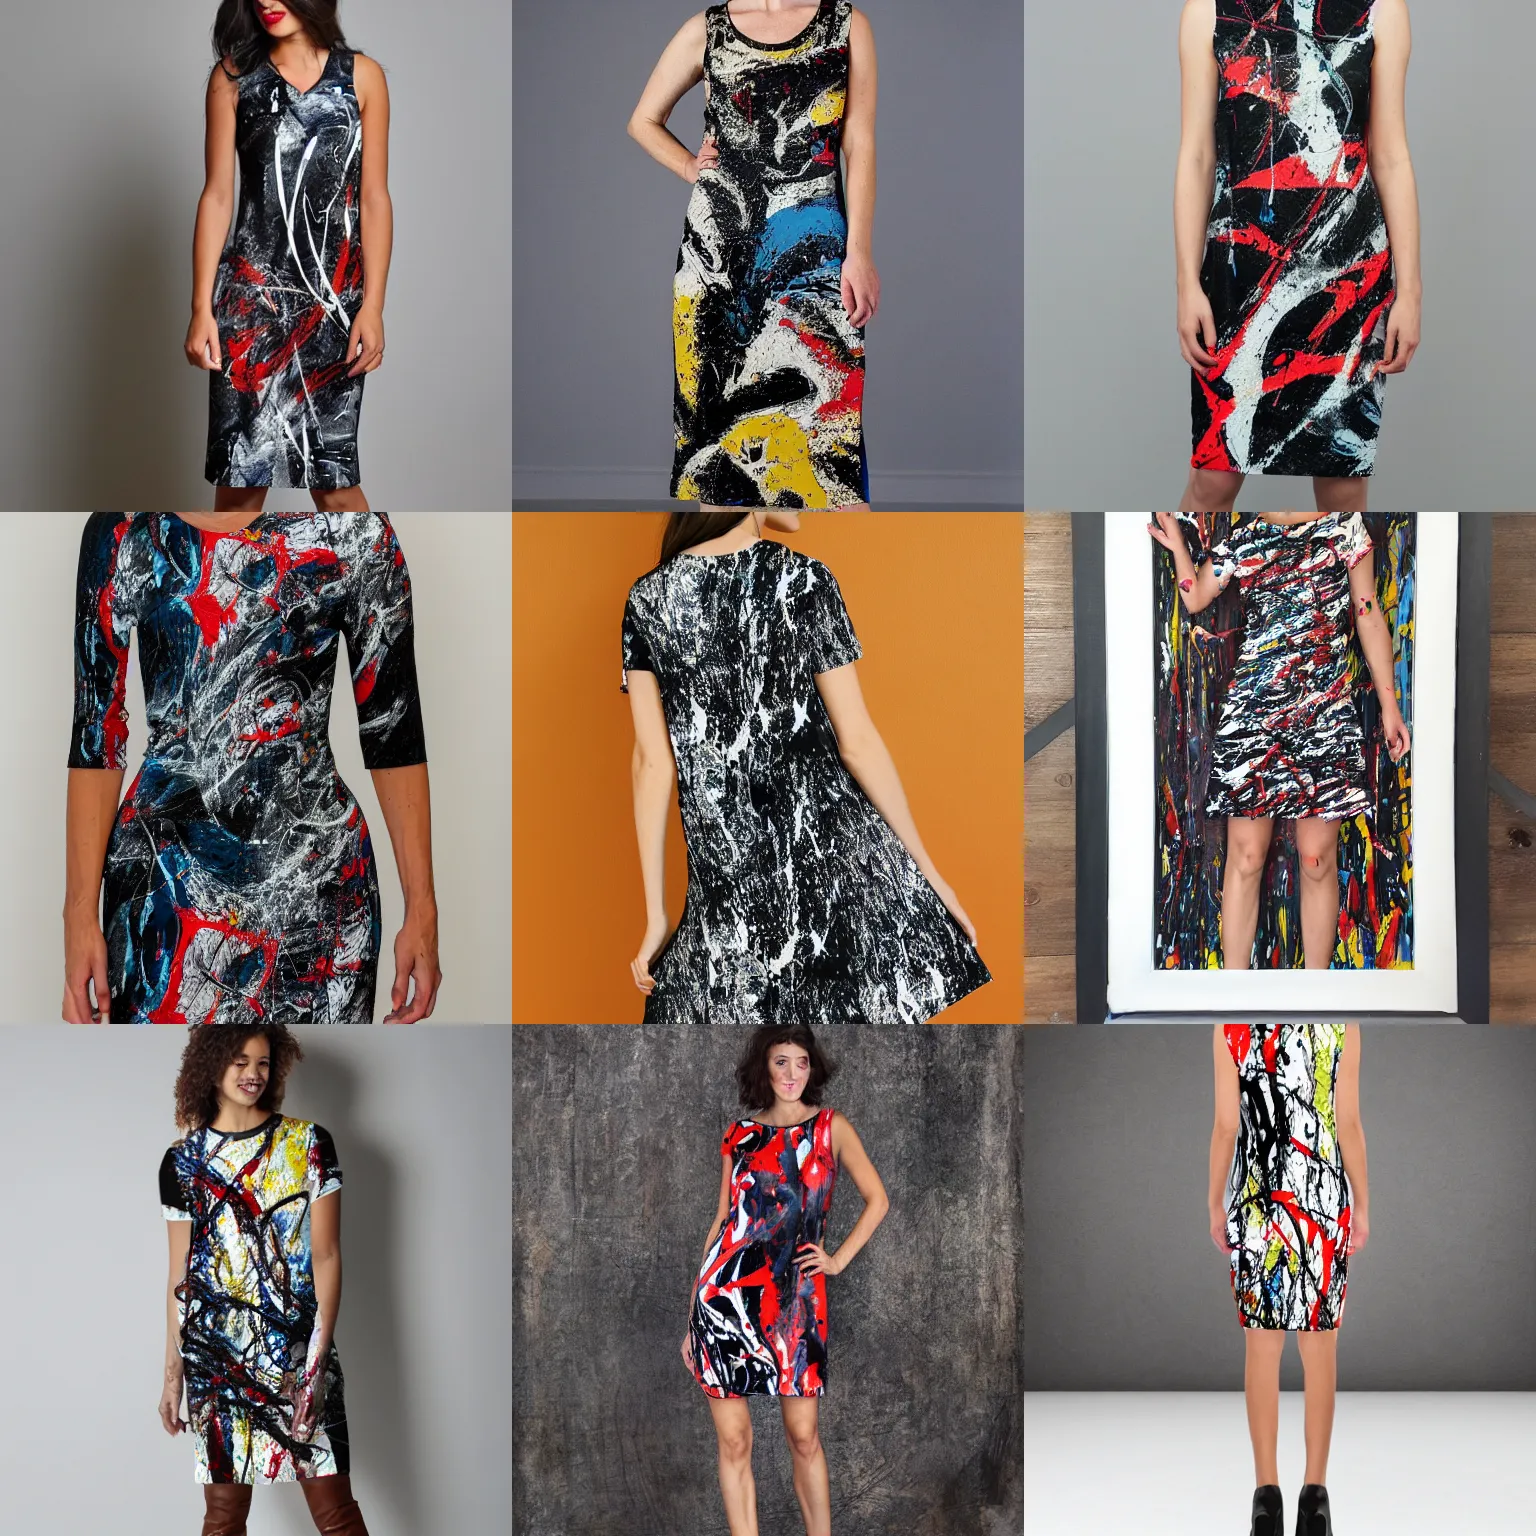 Prompt: pollock abstract art dress